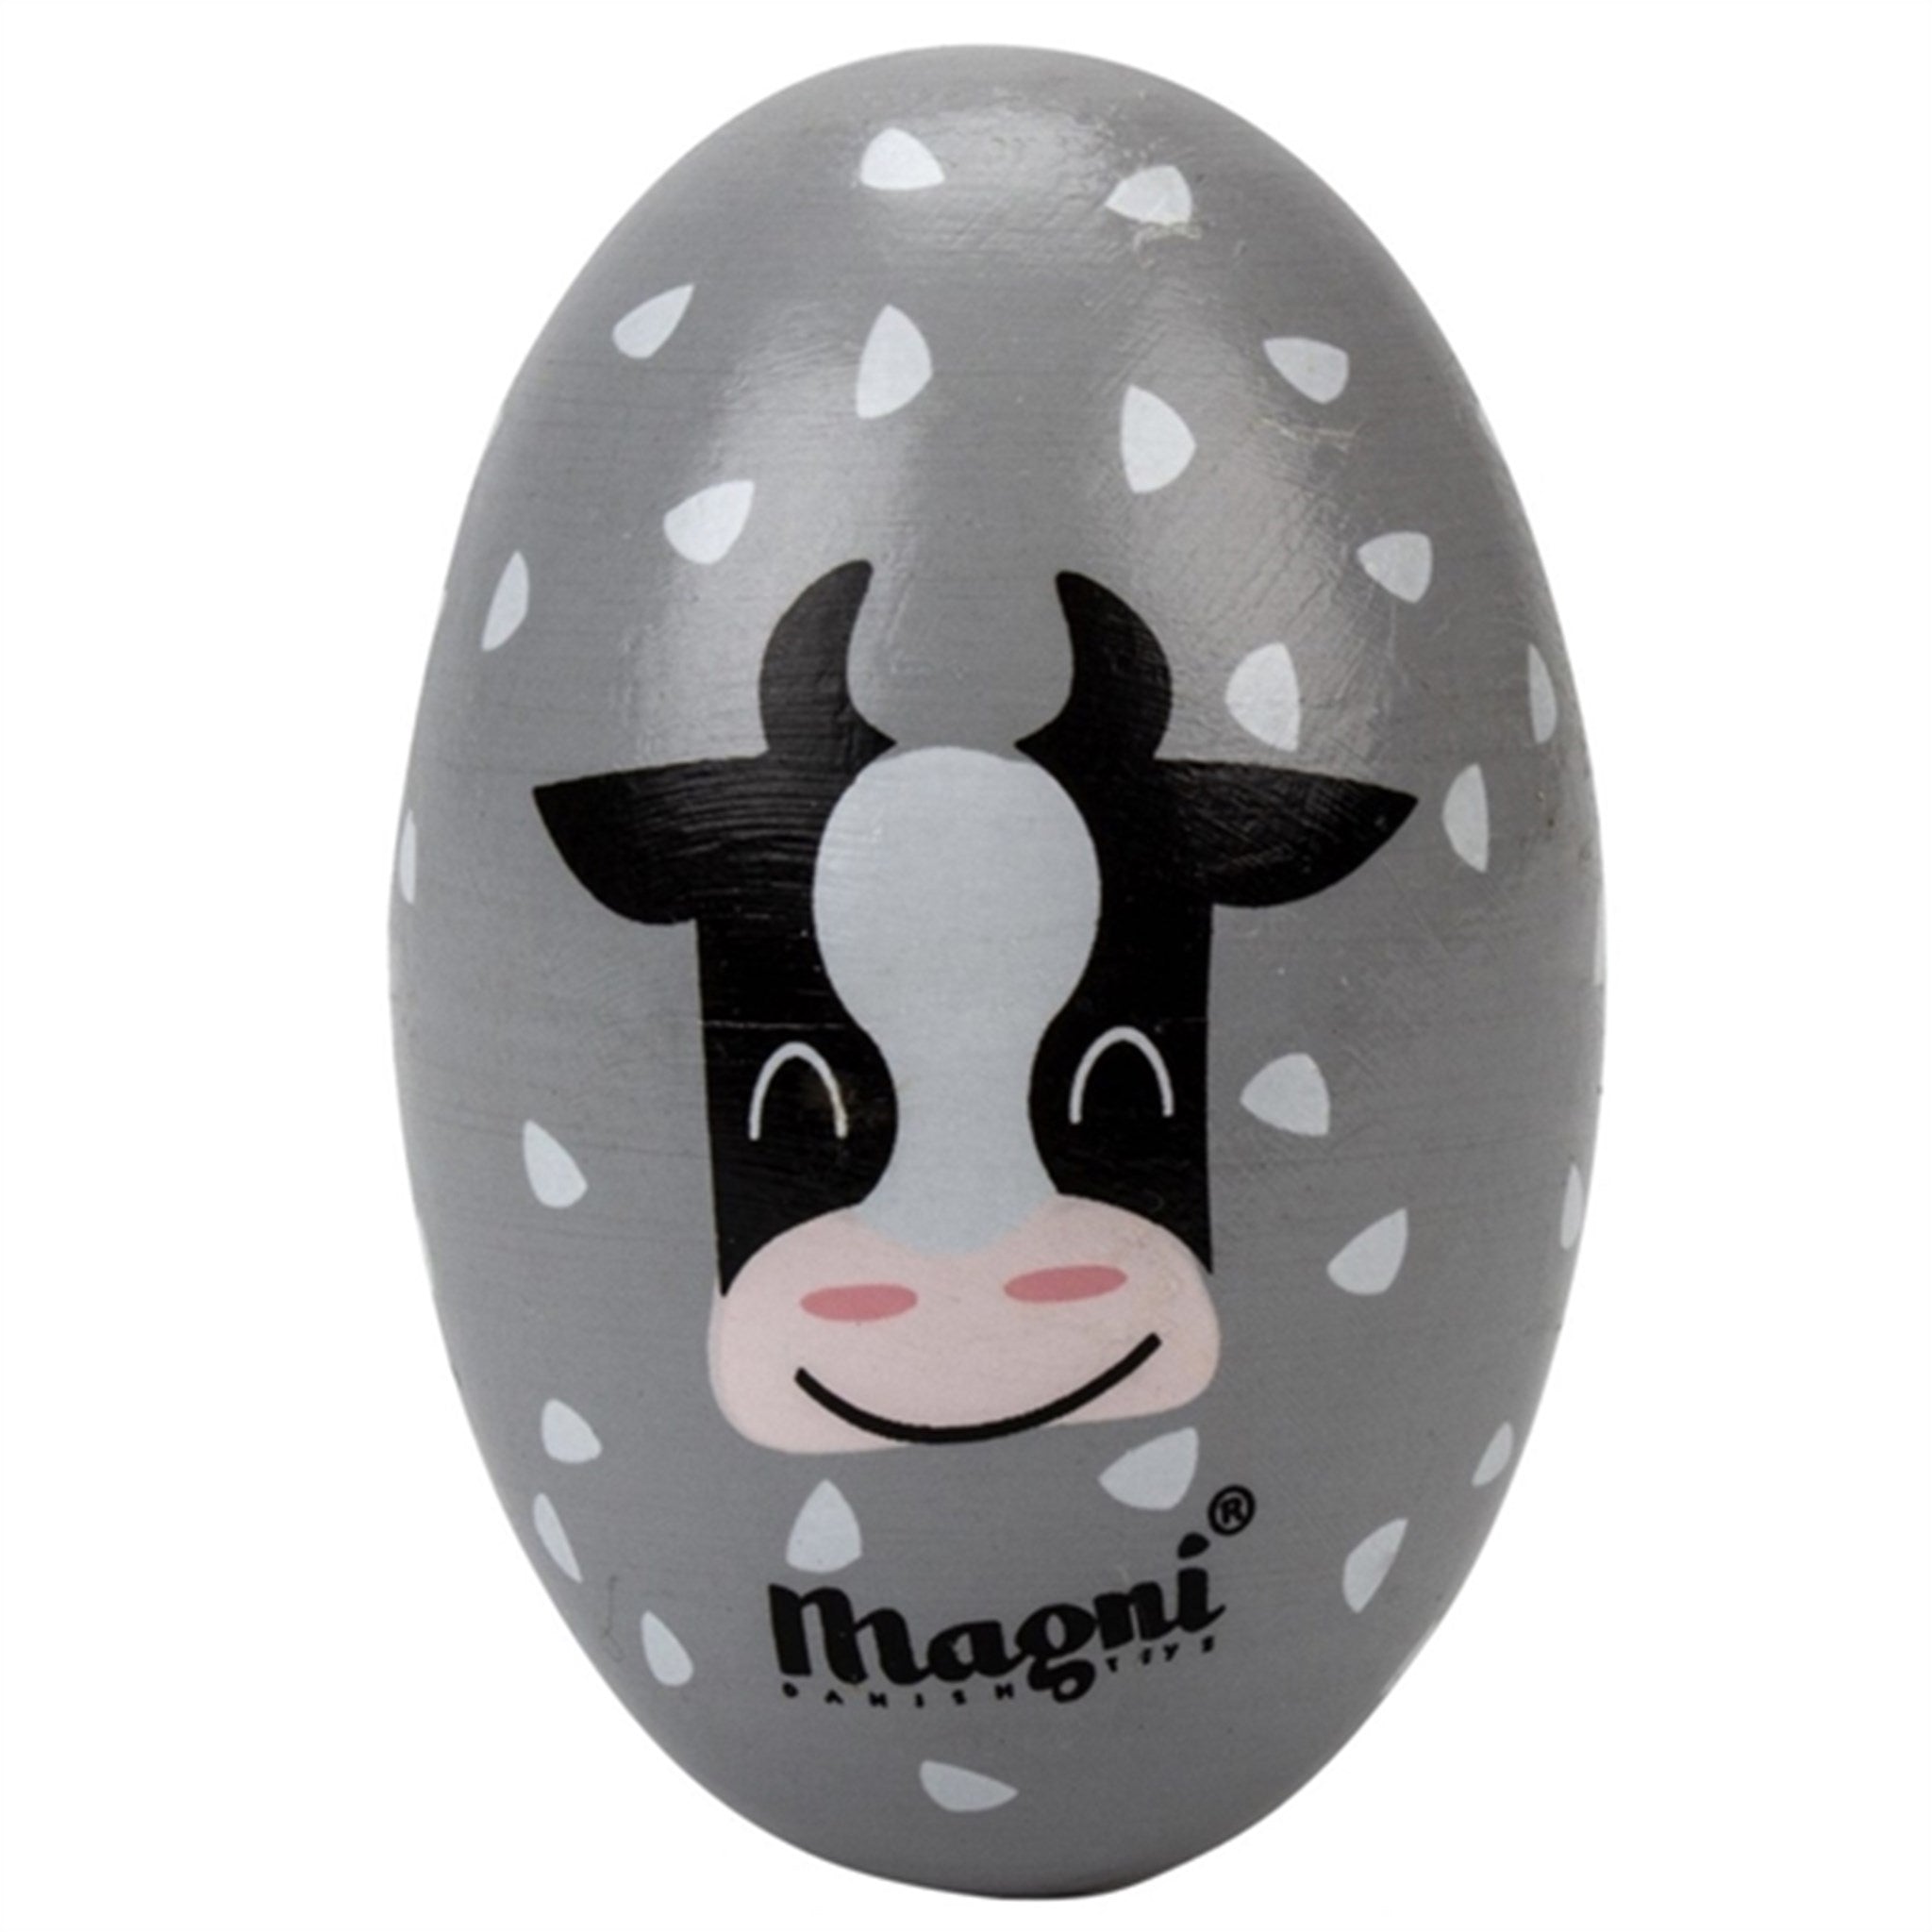 Magni Noisy Egg Grey - Cow